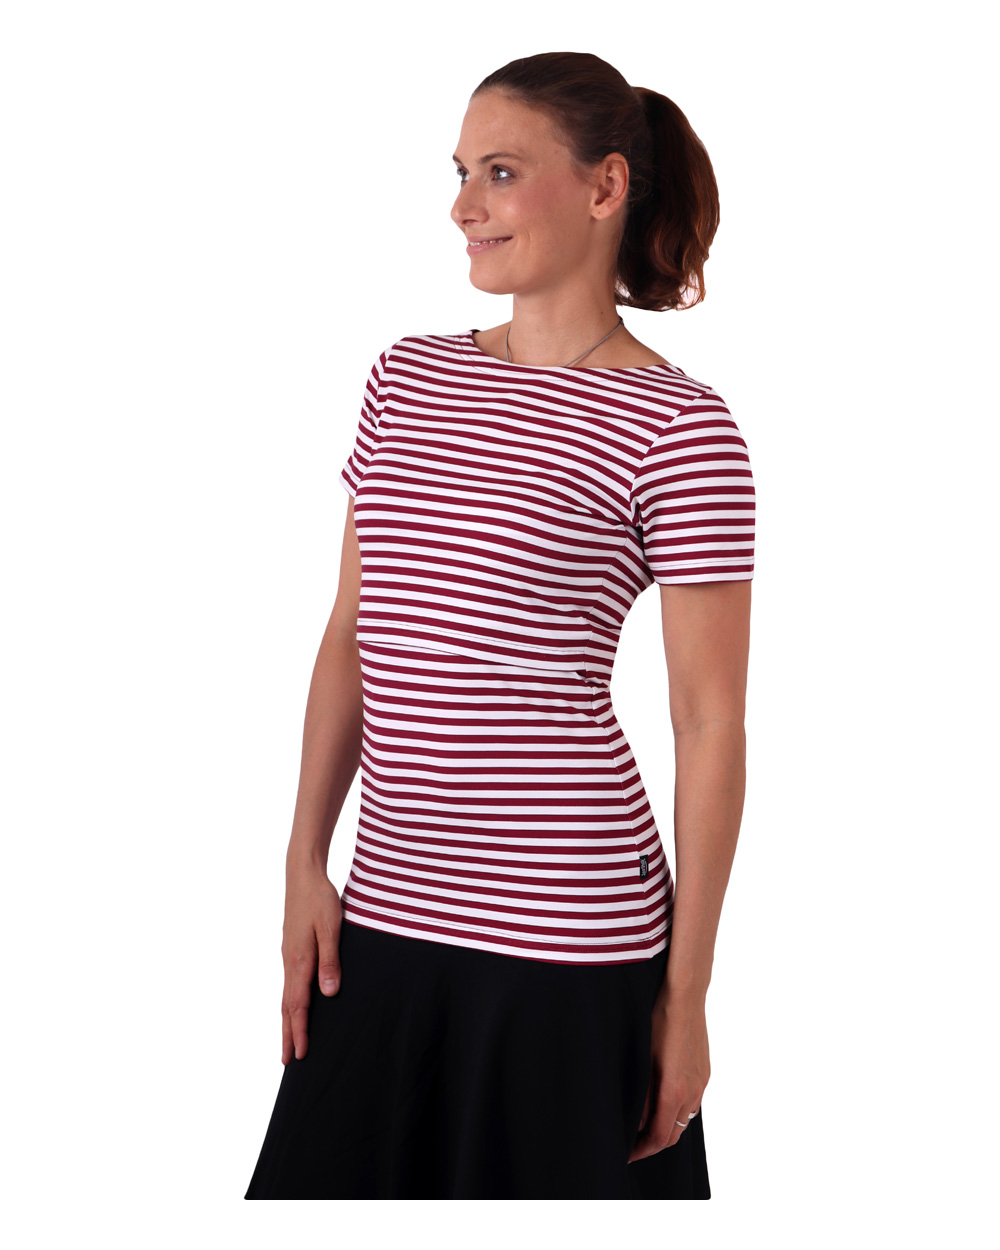 Breast-feeding T-shirt Katerina, short sleeves, red-white striped